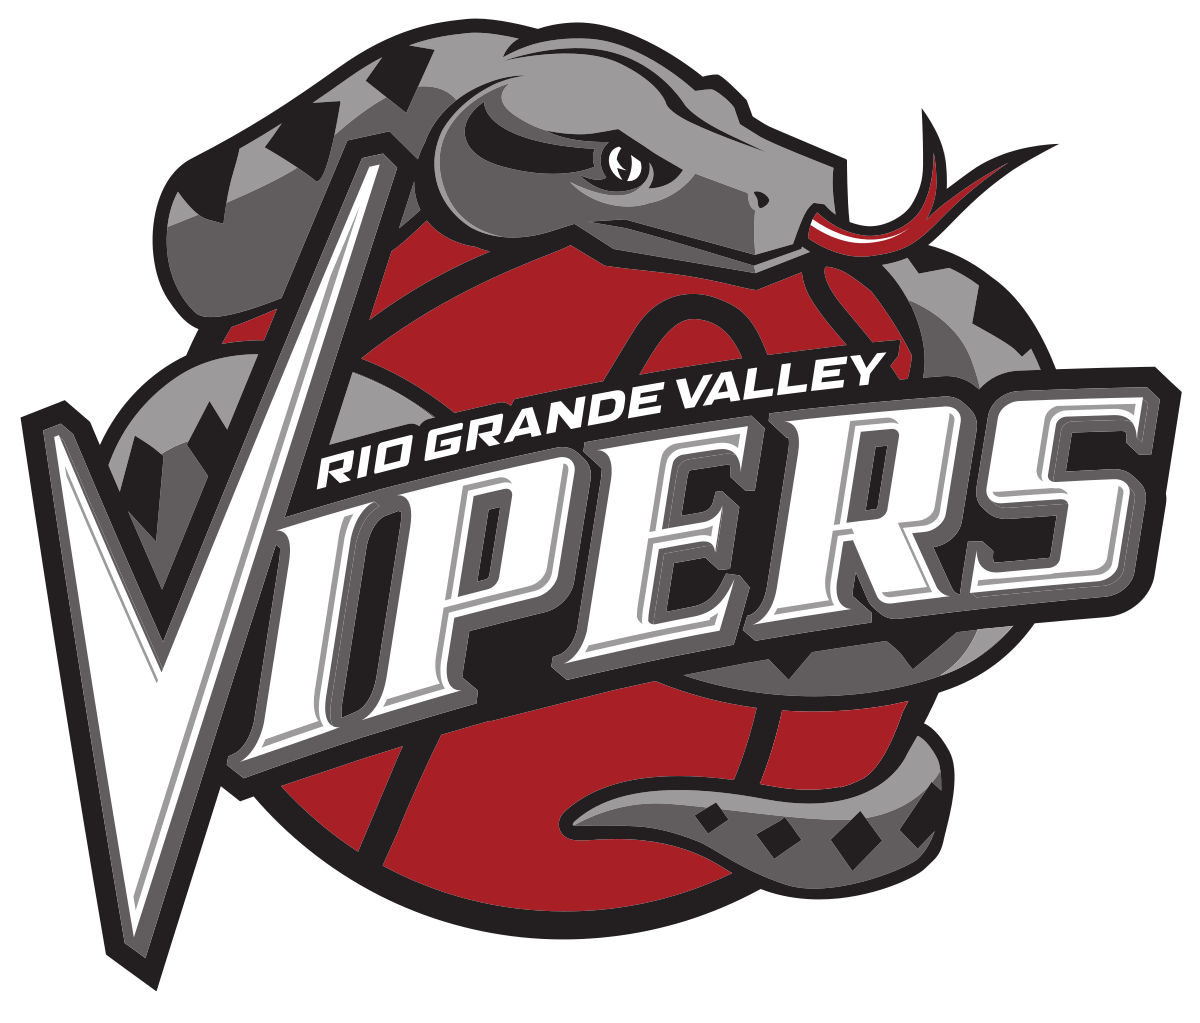 Old Viper Logo - Rio Grande Valley Vipers